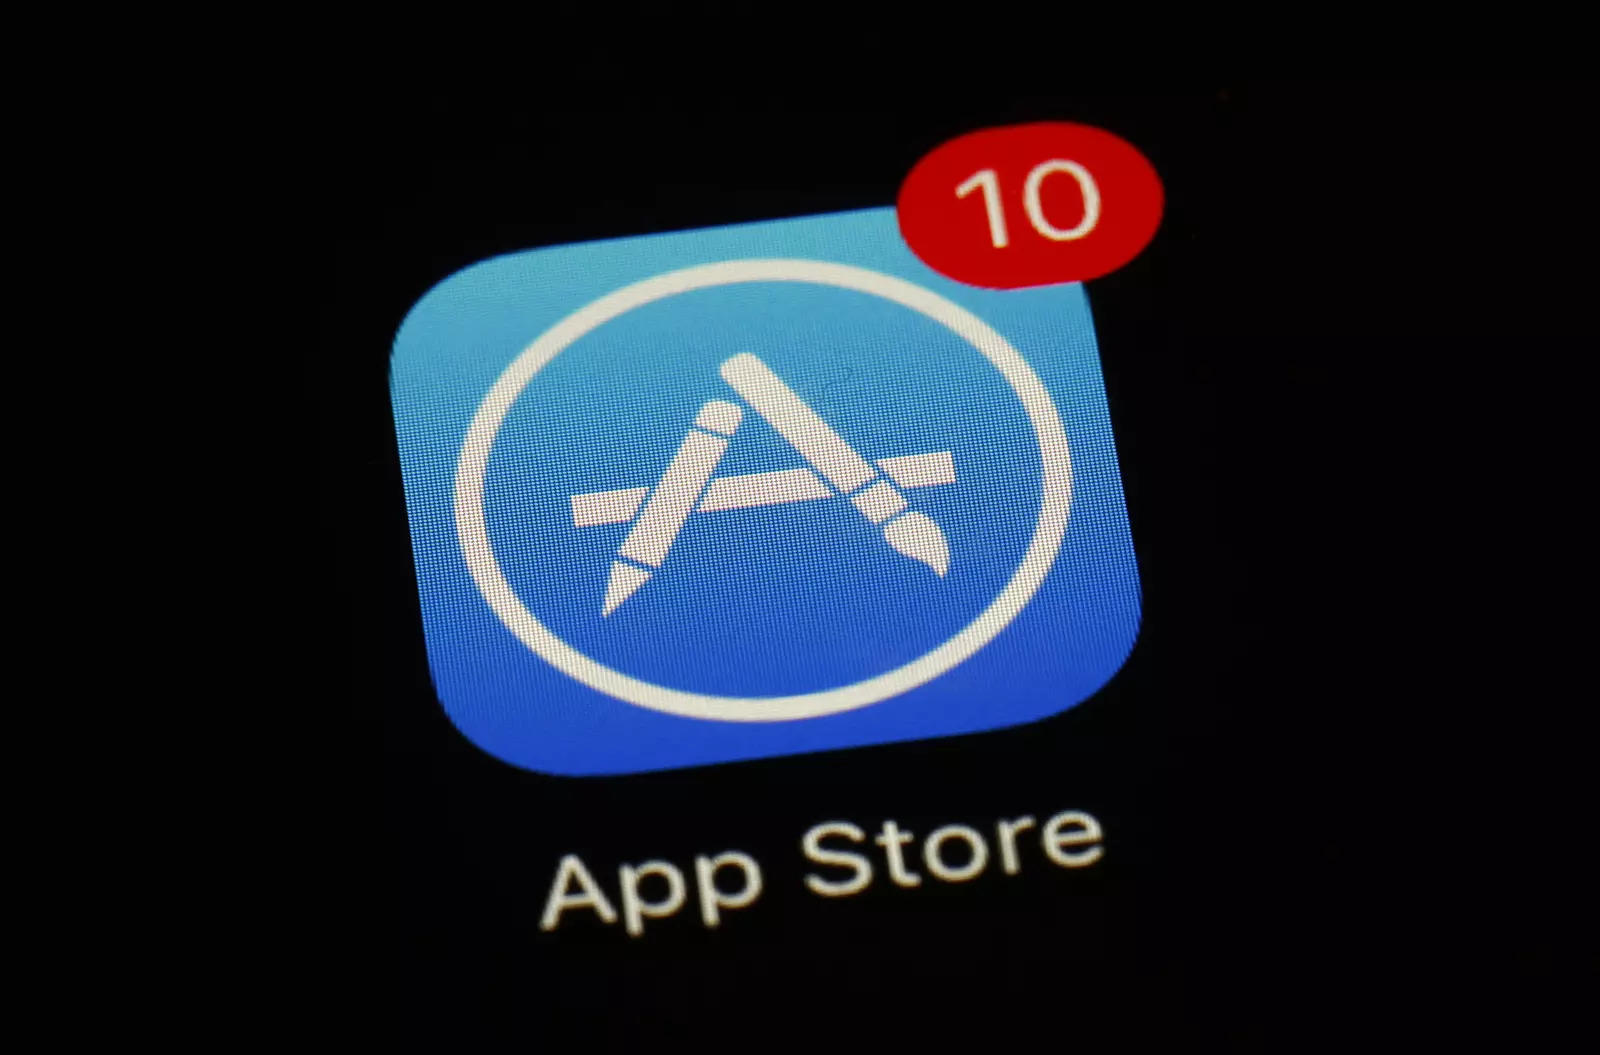 App store avalanche forecast as Apple bows to EU demands